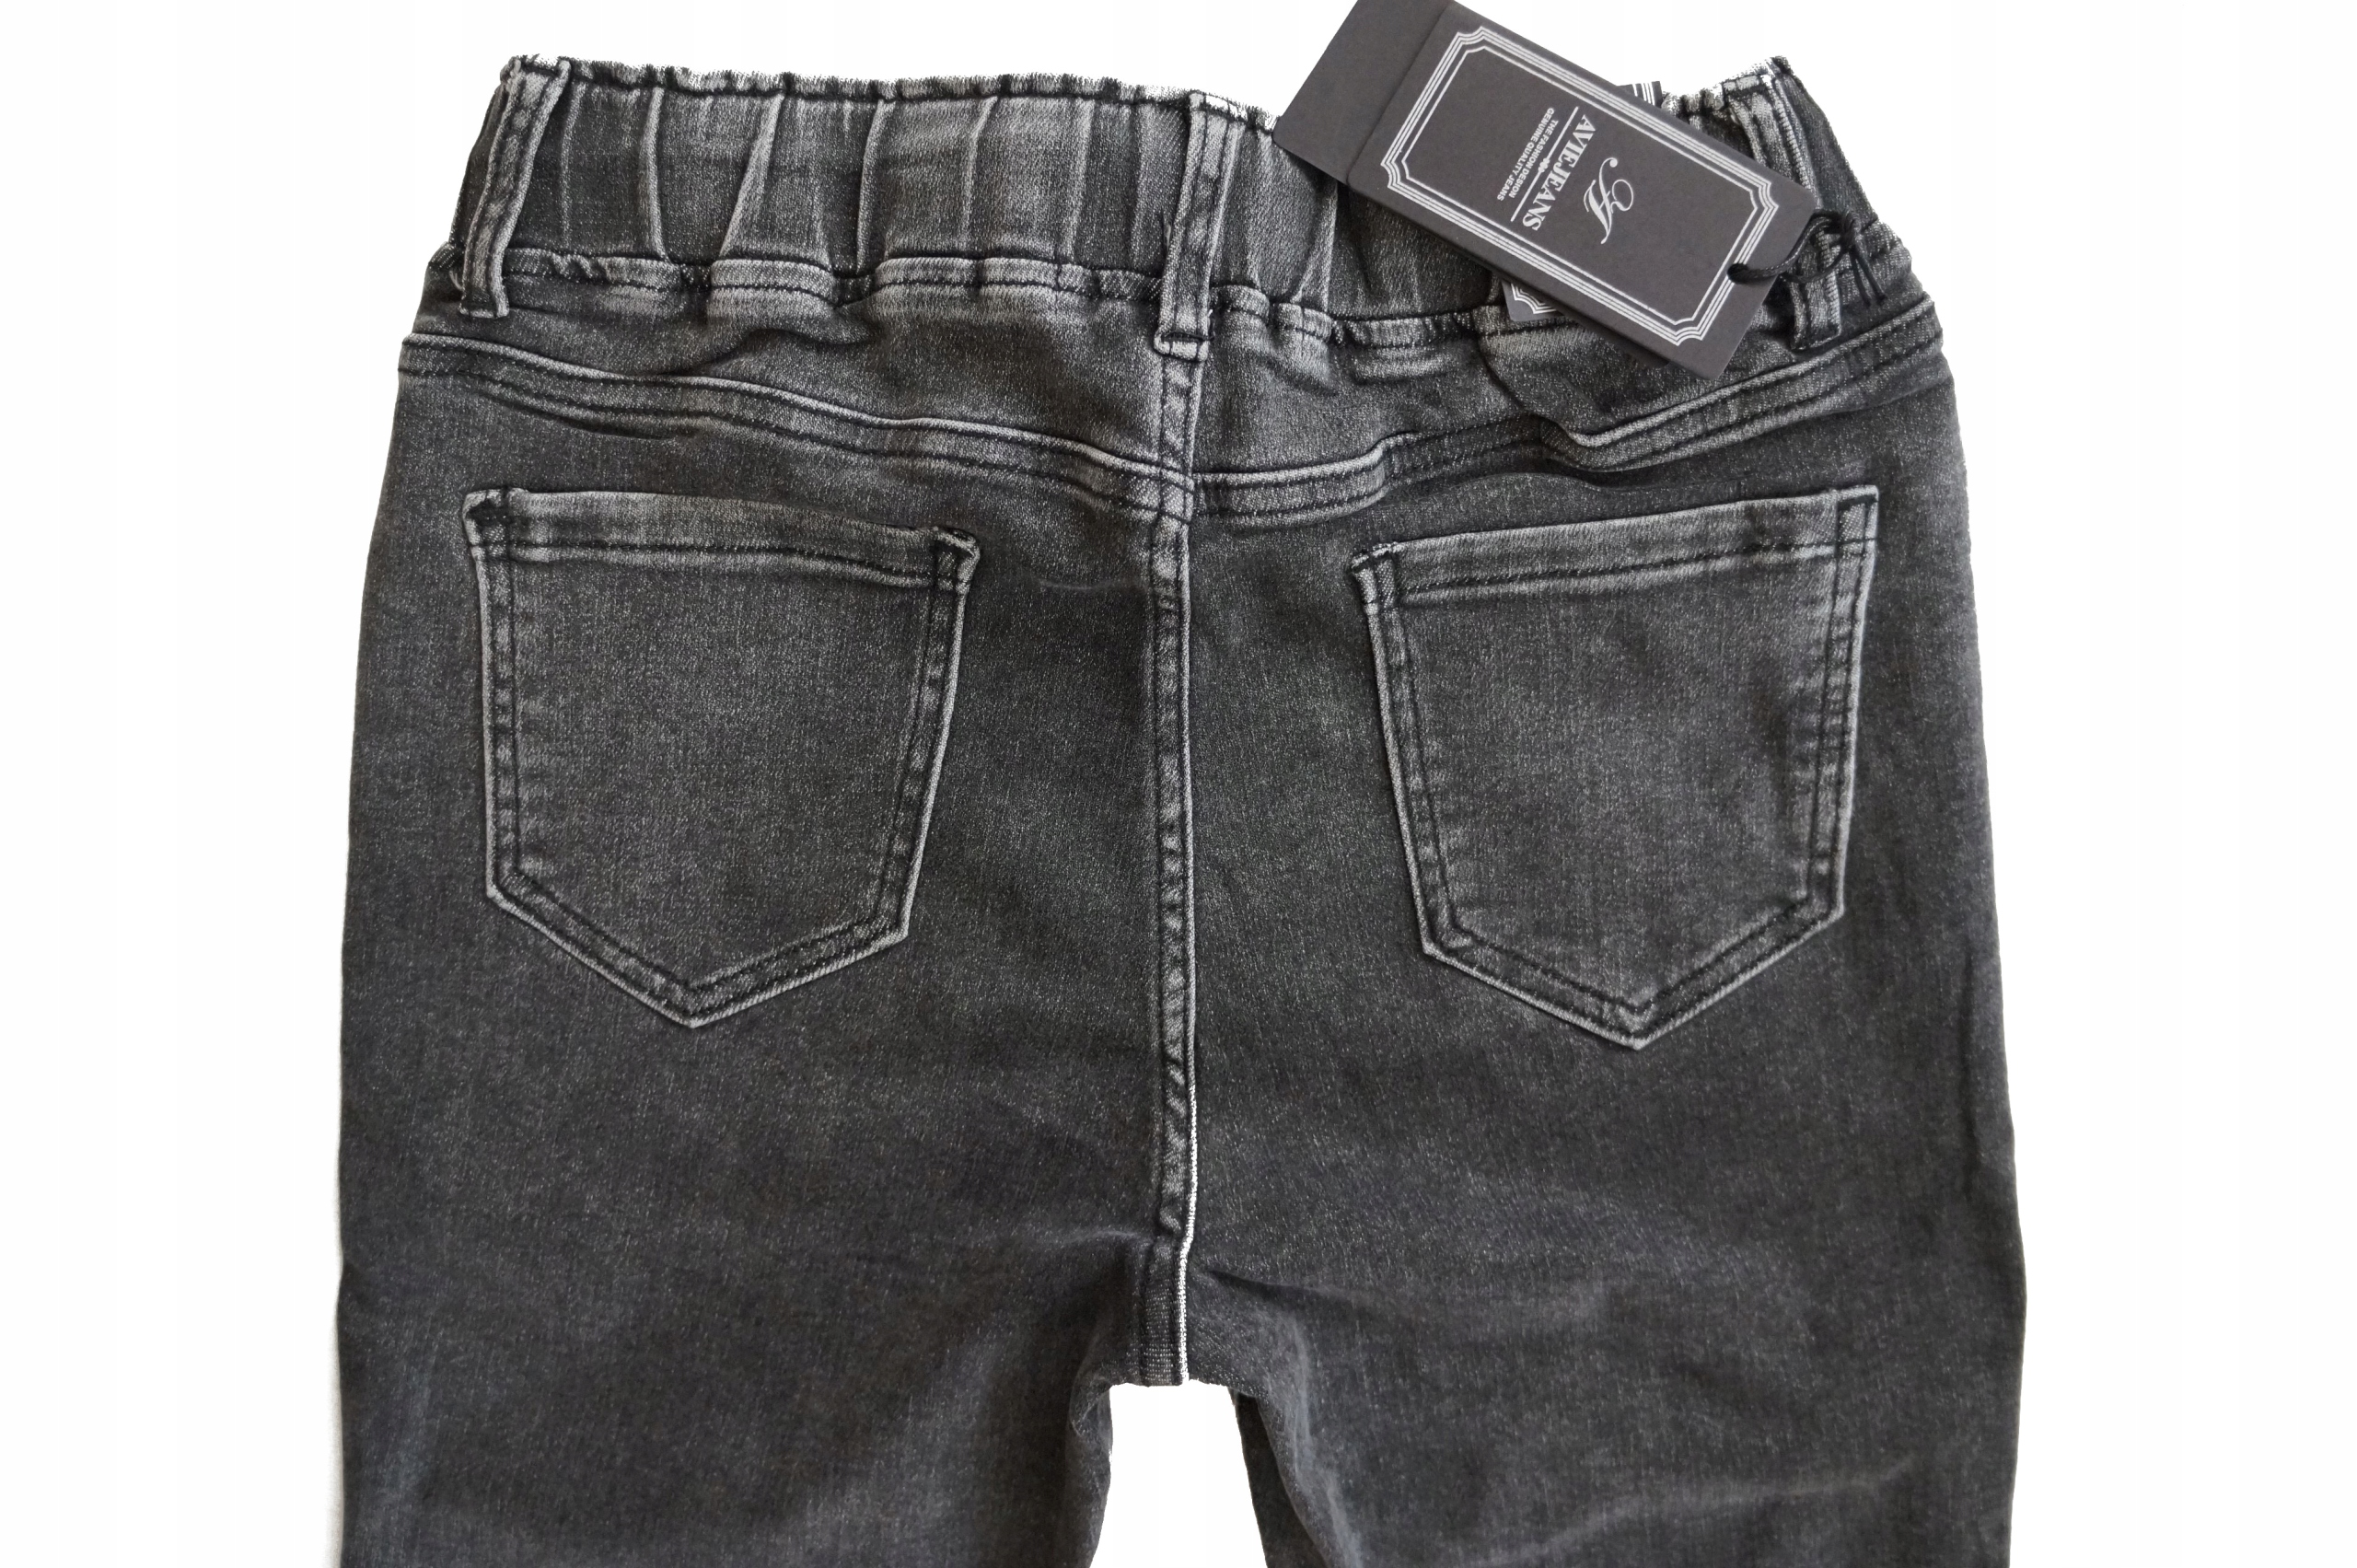 tujkama_AVIE брюки джинсы на резинке / резинка завязанная Midsection (Waist Height) high